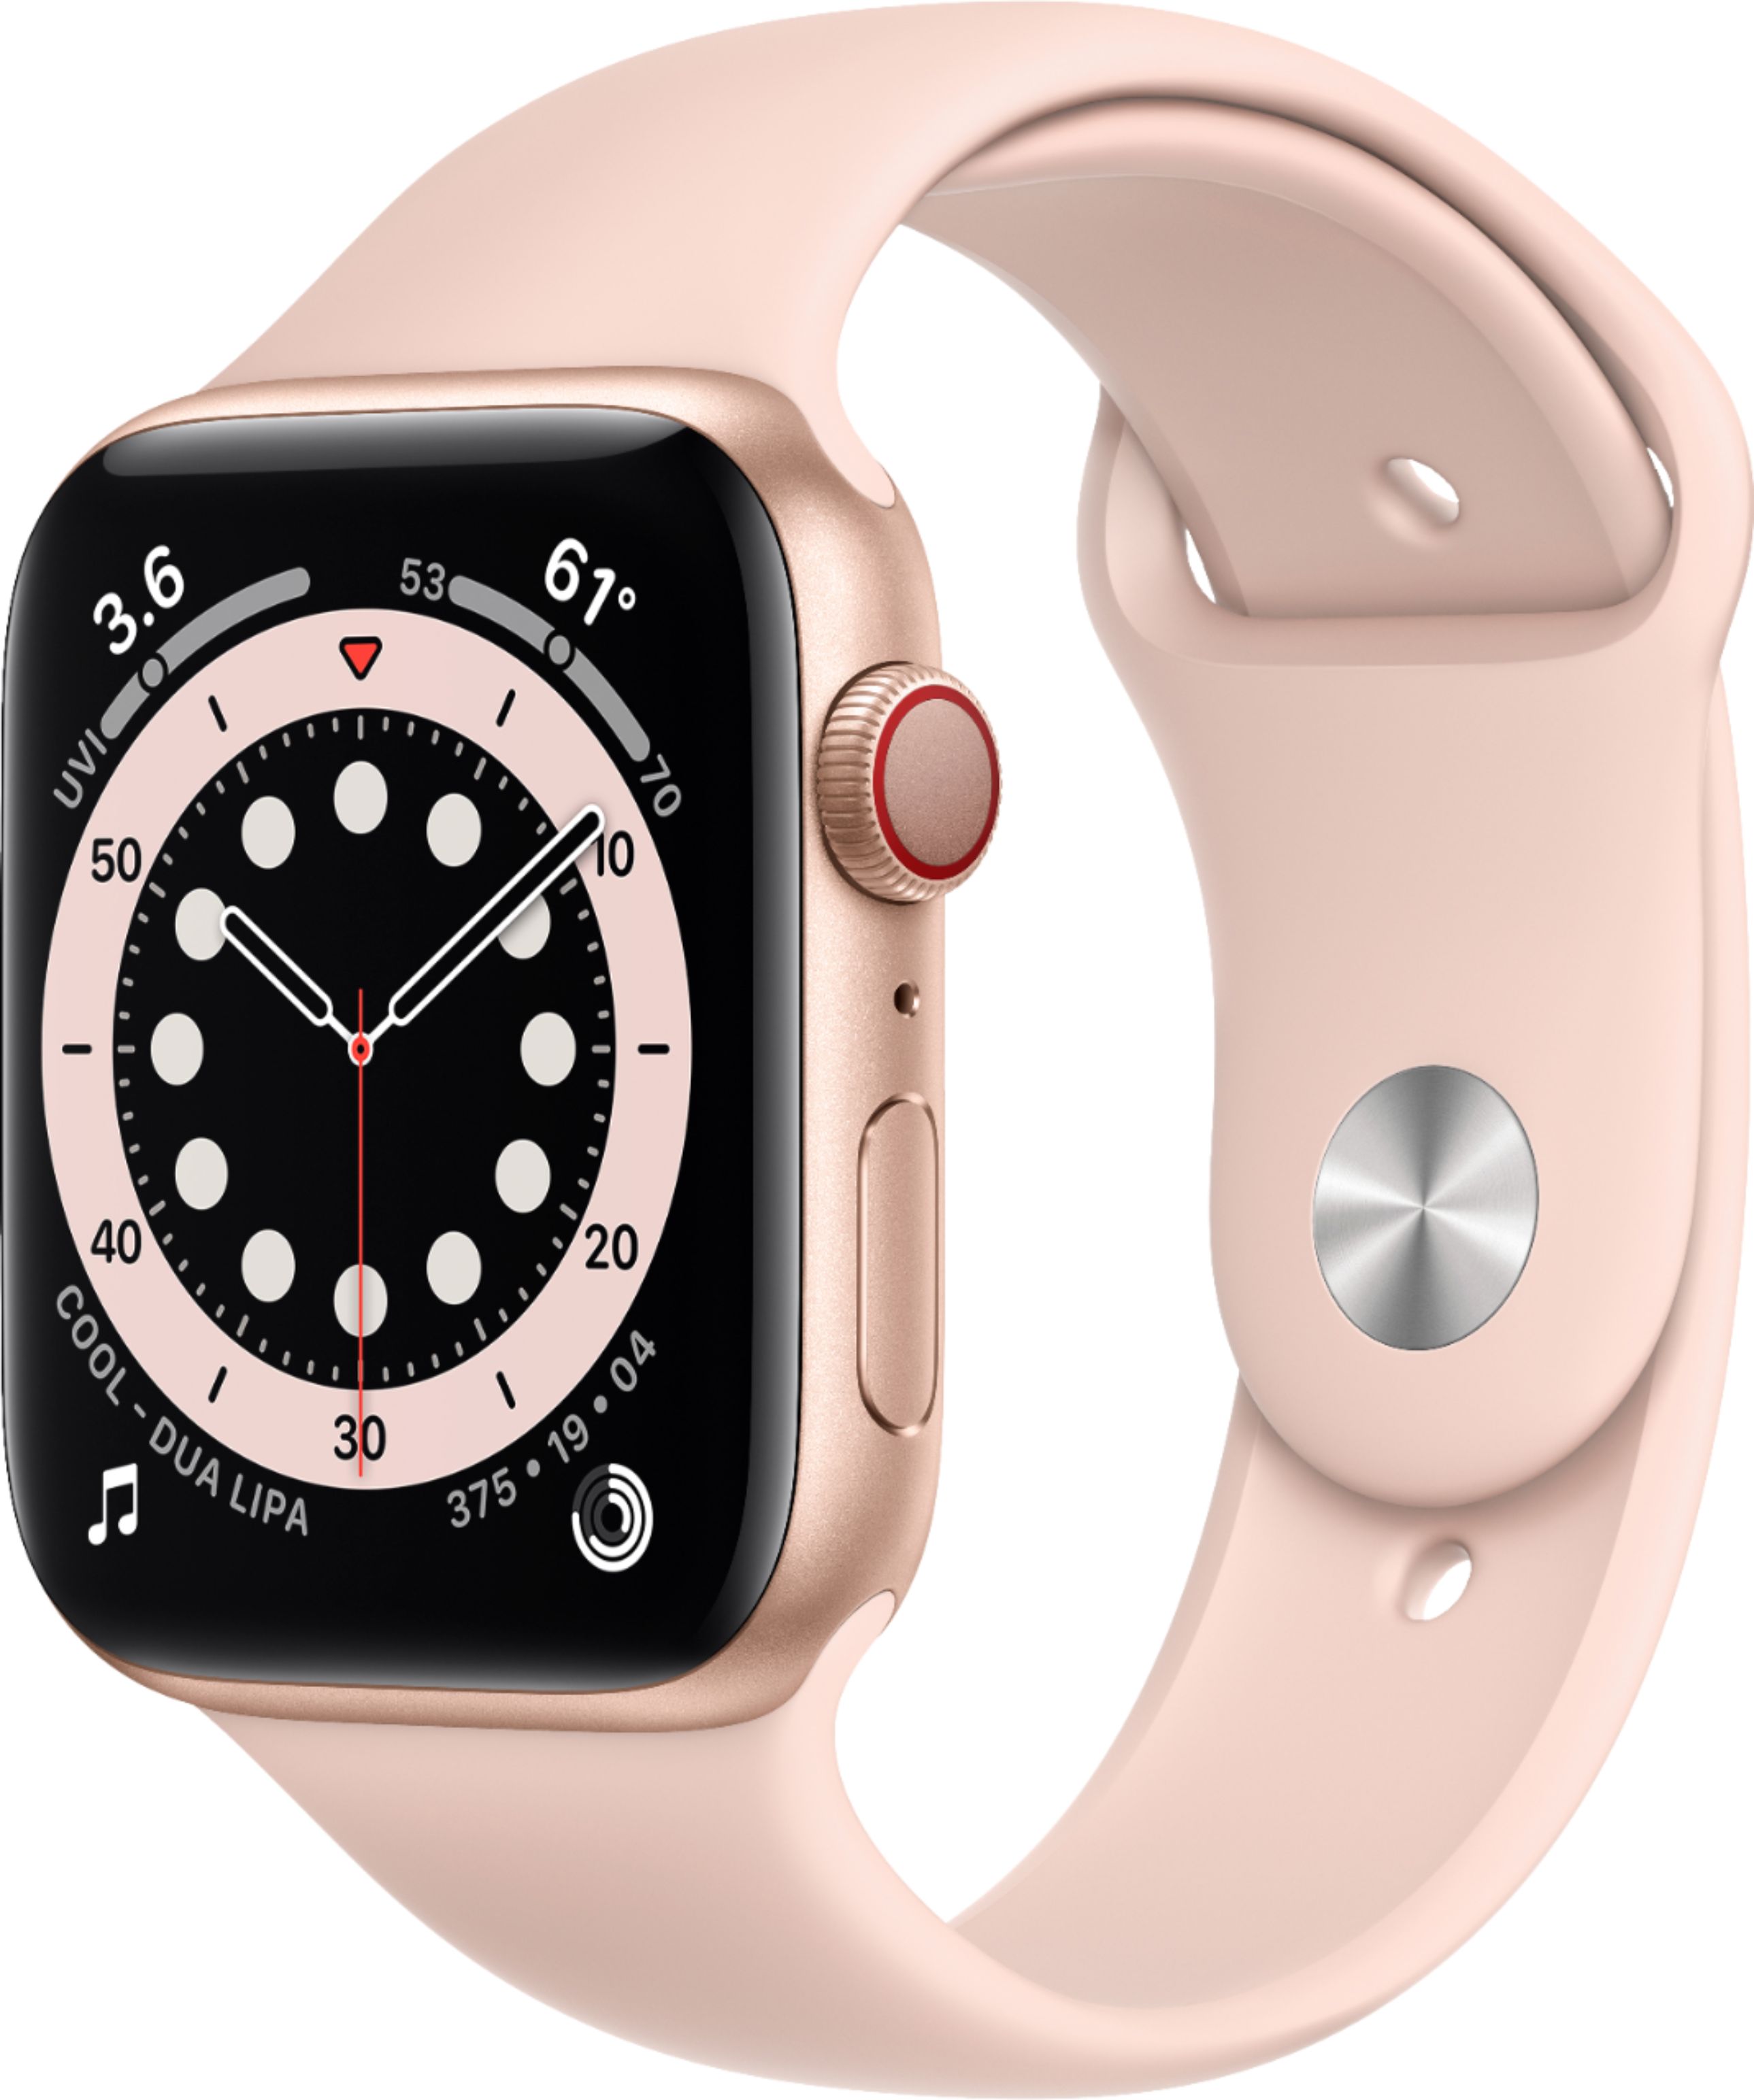 gold pink apple watch series 4